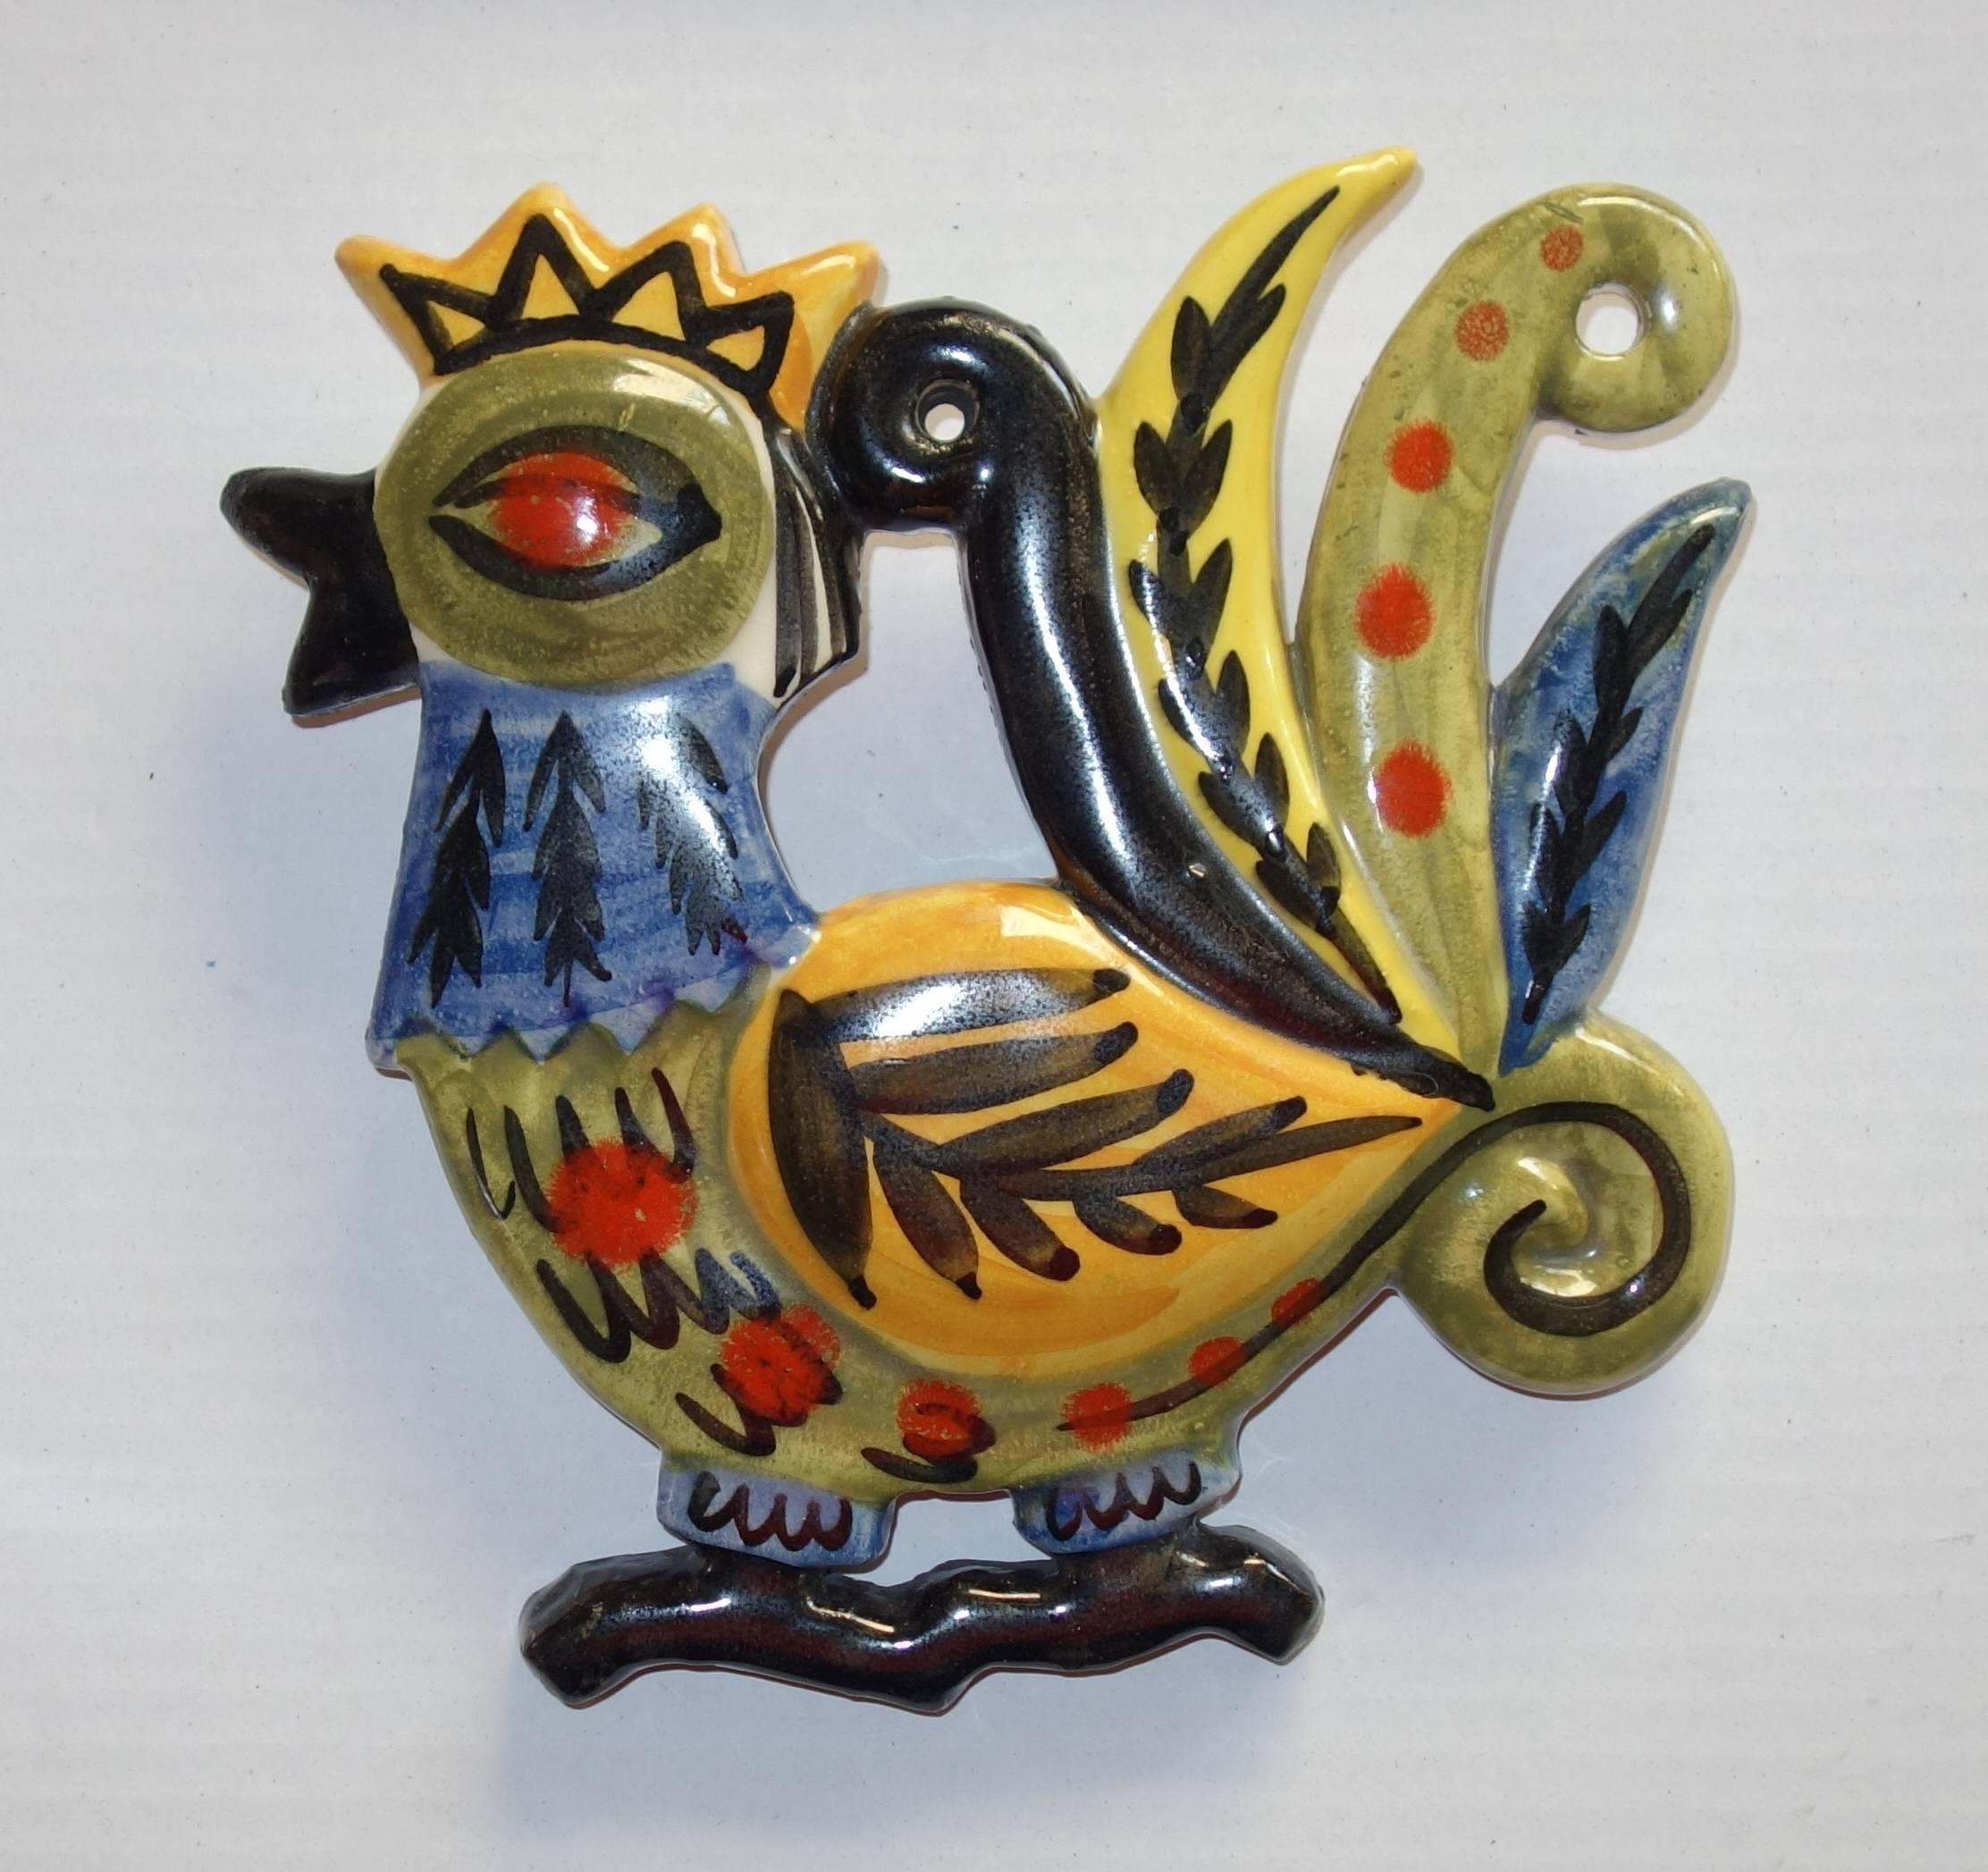 Gwen Jégou Figurative Sculpture - Traditional Brittany Rooster - Original handsigned ceramic